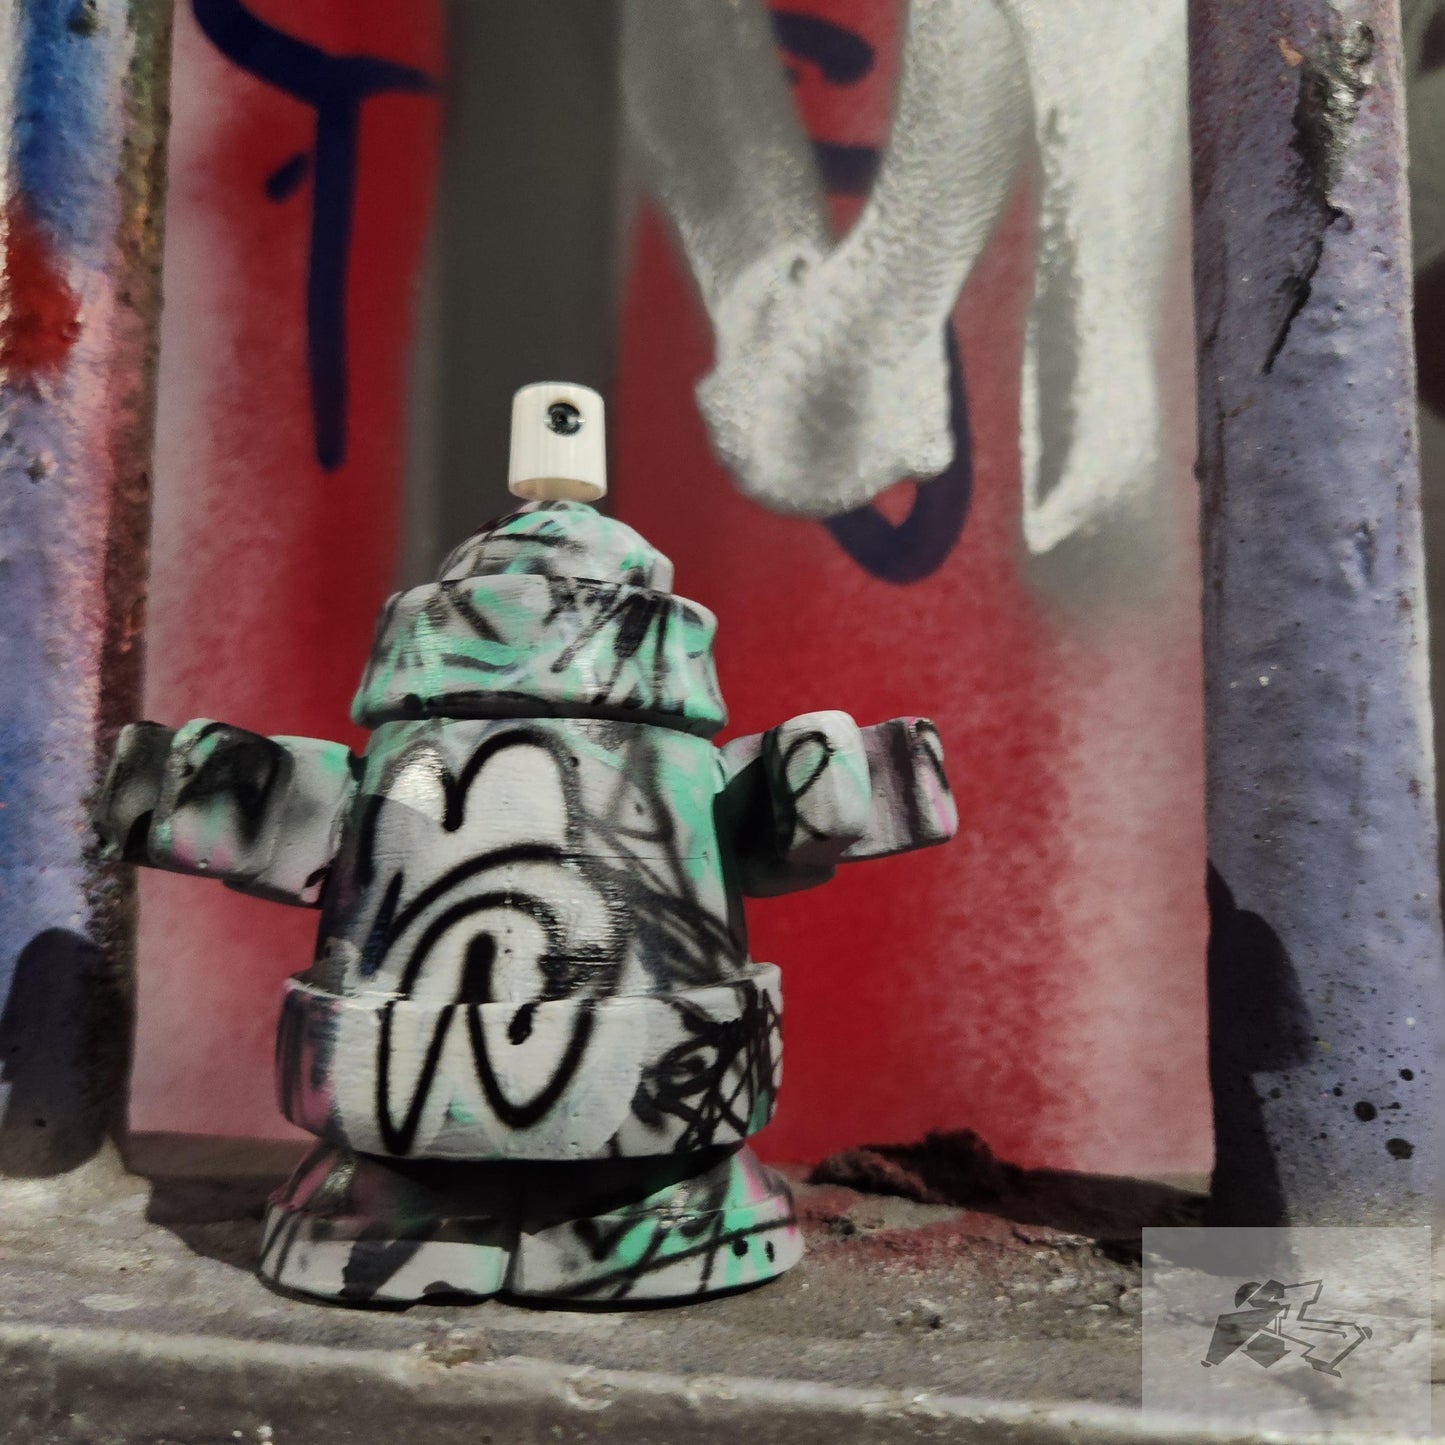 Robot spray can model - Rafbotz-Silence Melbourne